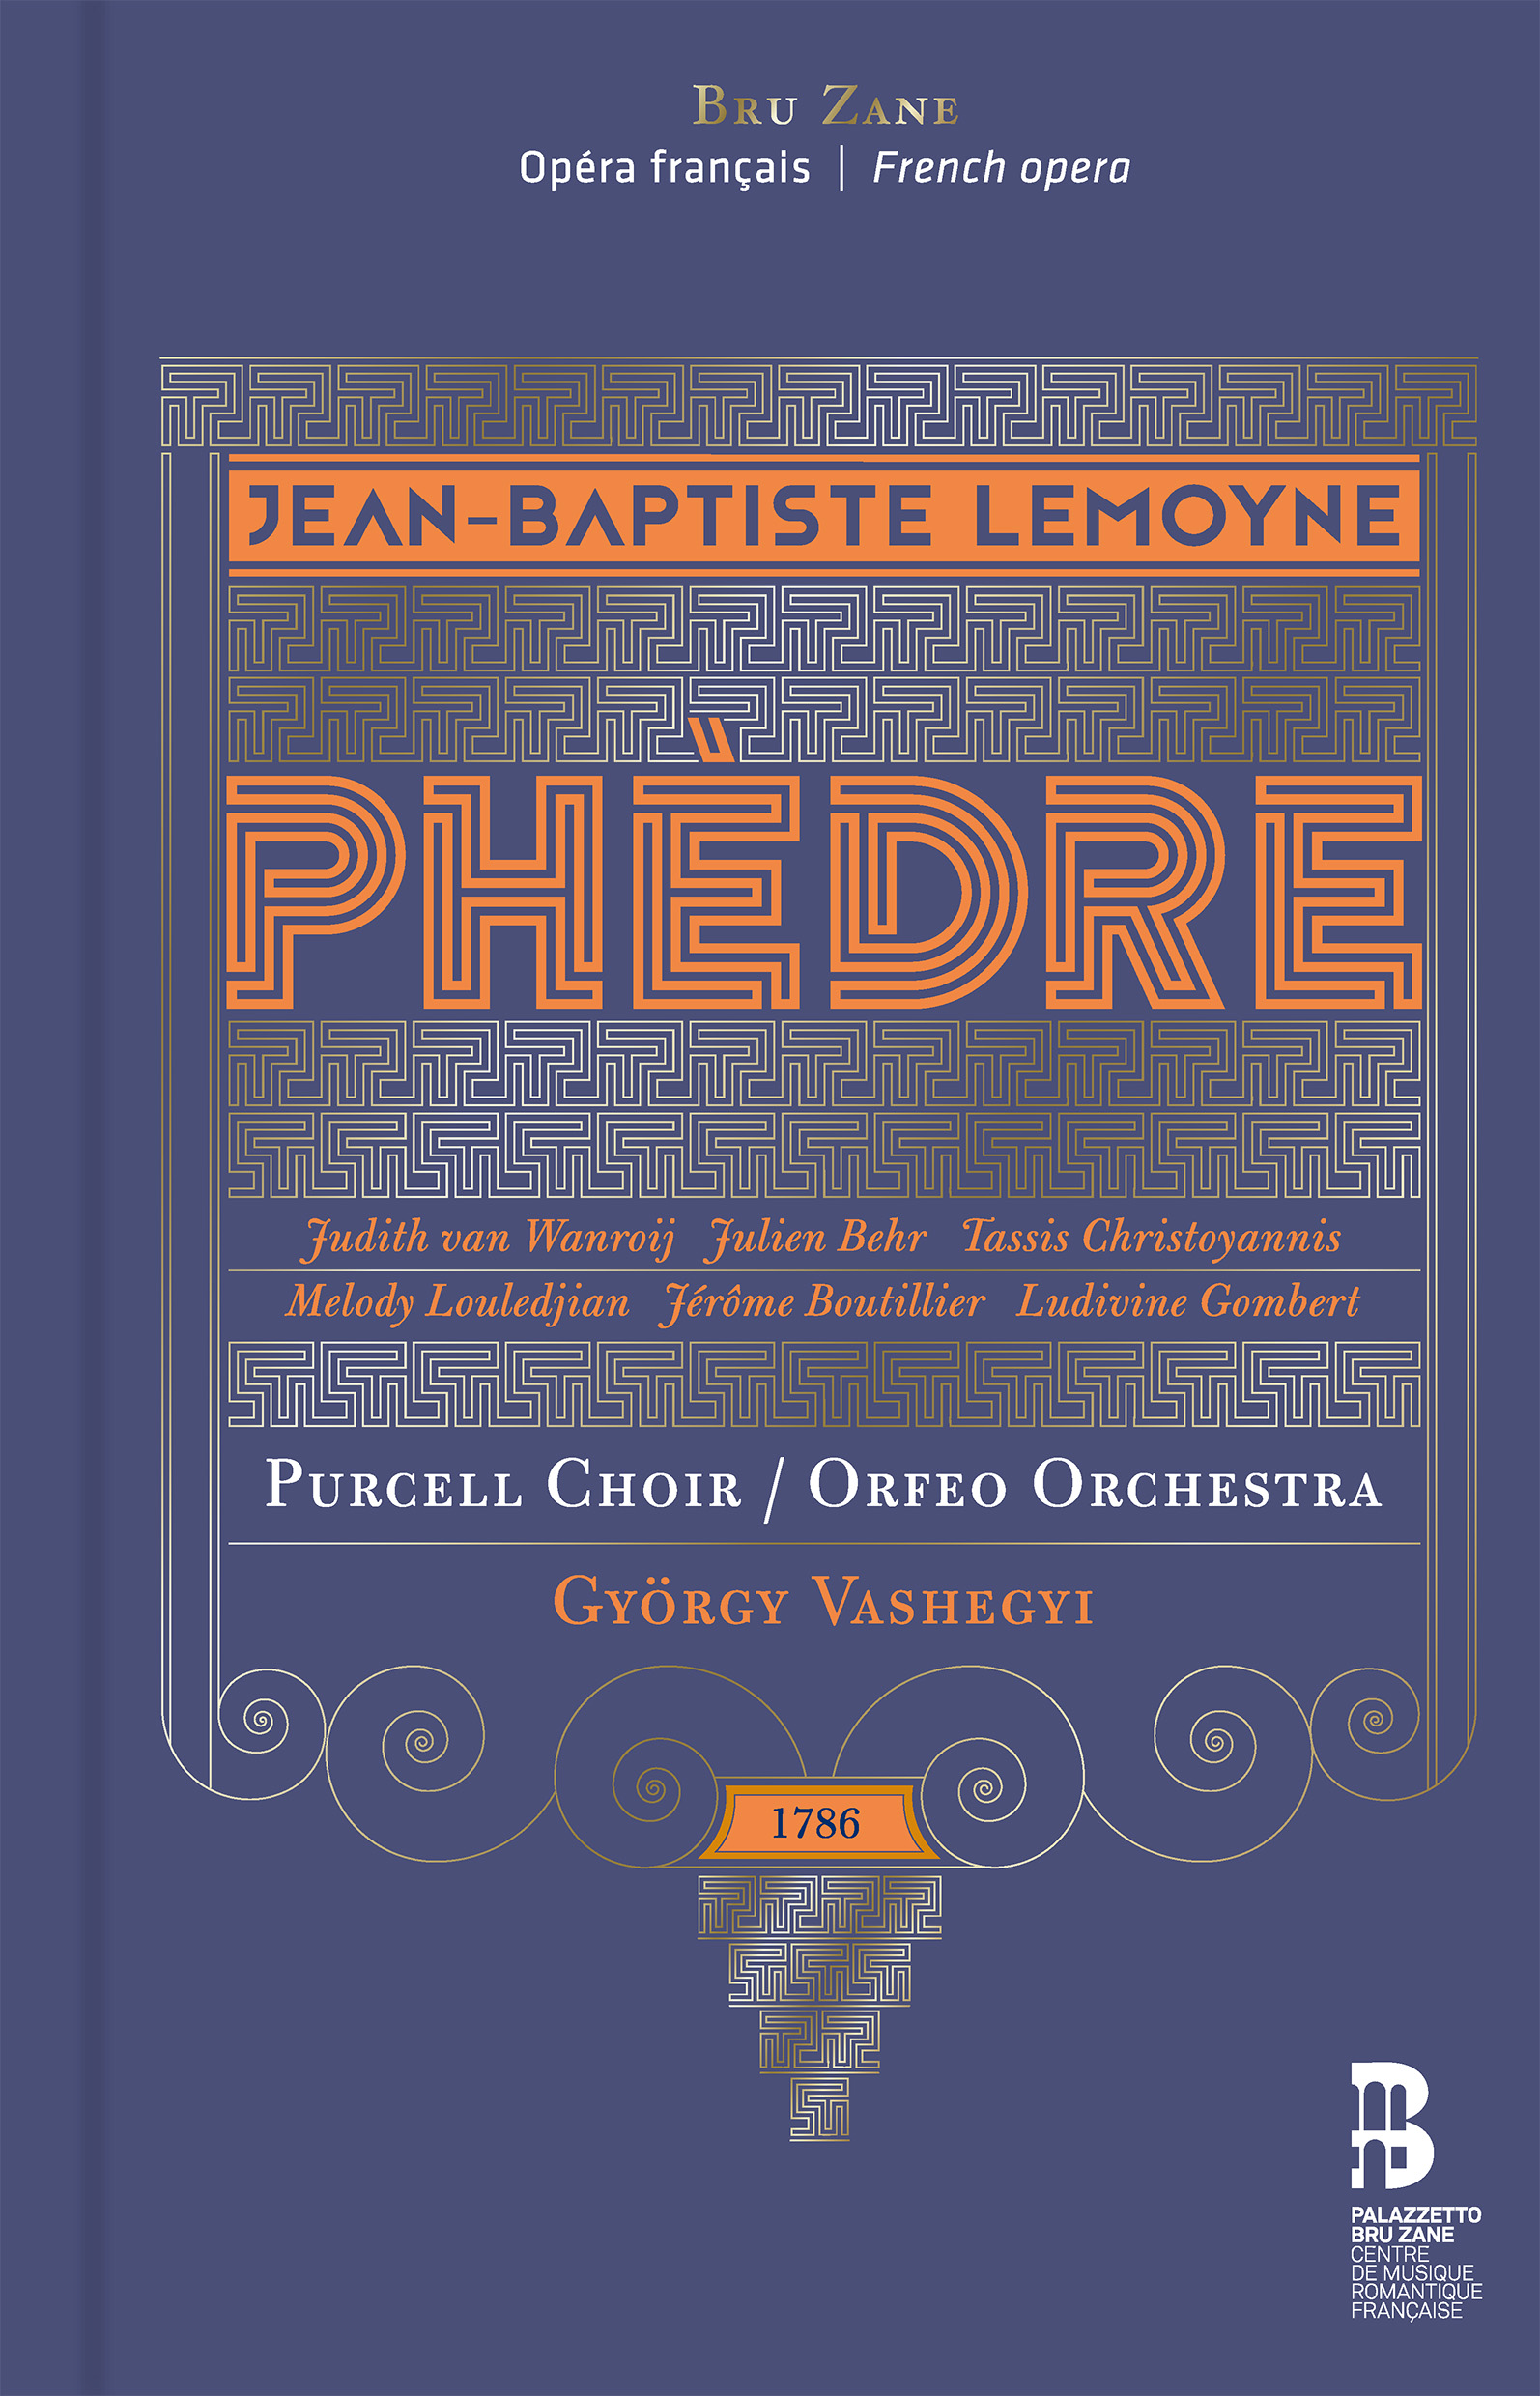 lemoyne calendar 2021 Phedre Opera Francais Bru Zane lemoyne calendar 2021